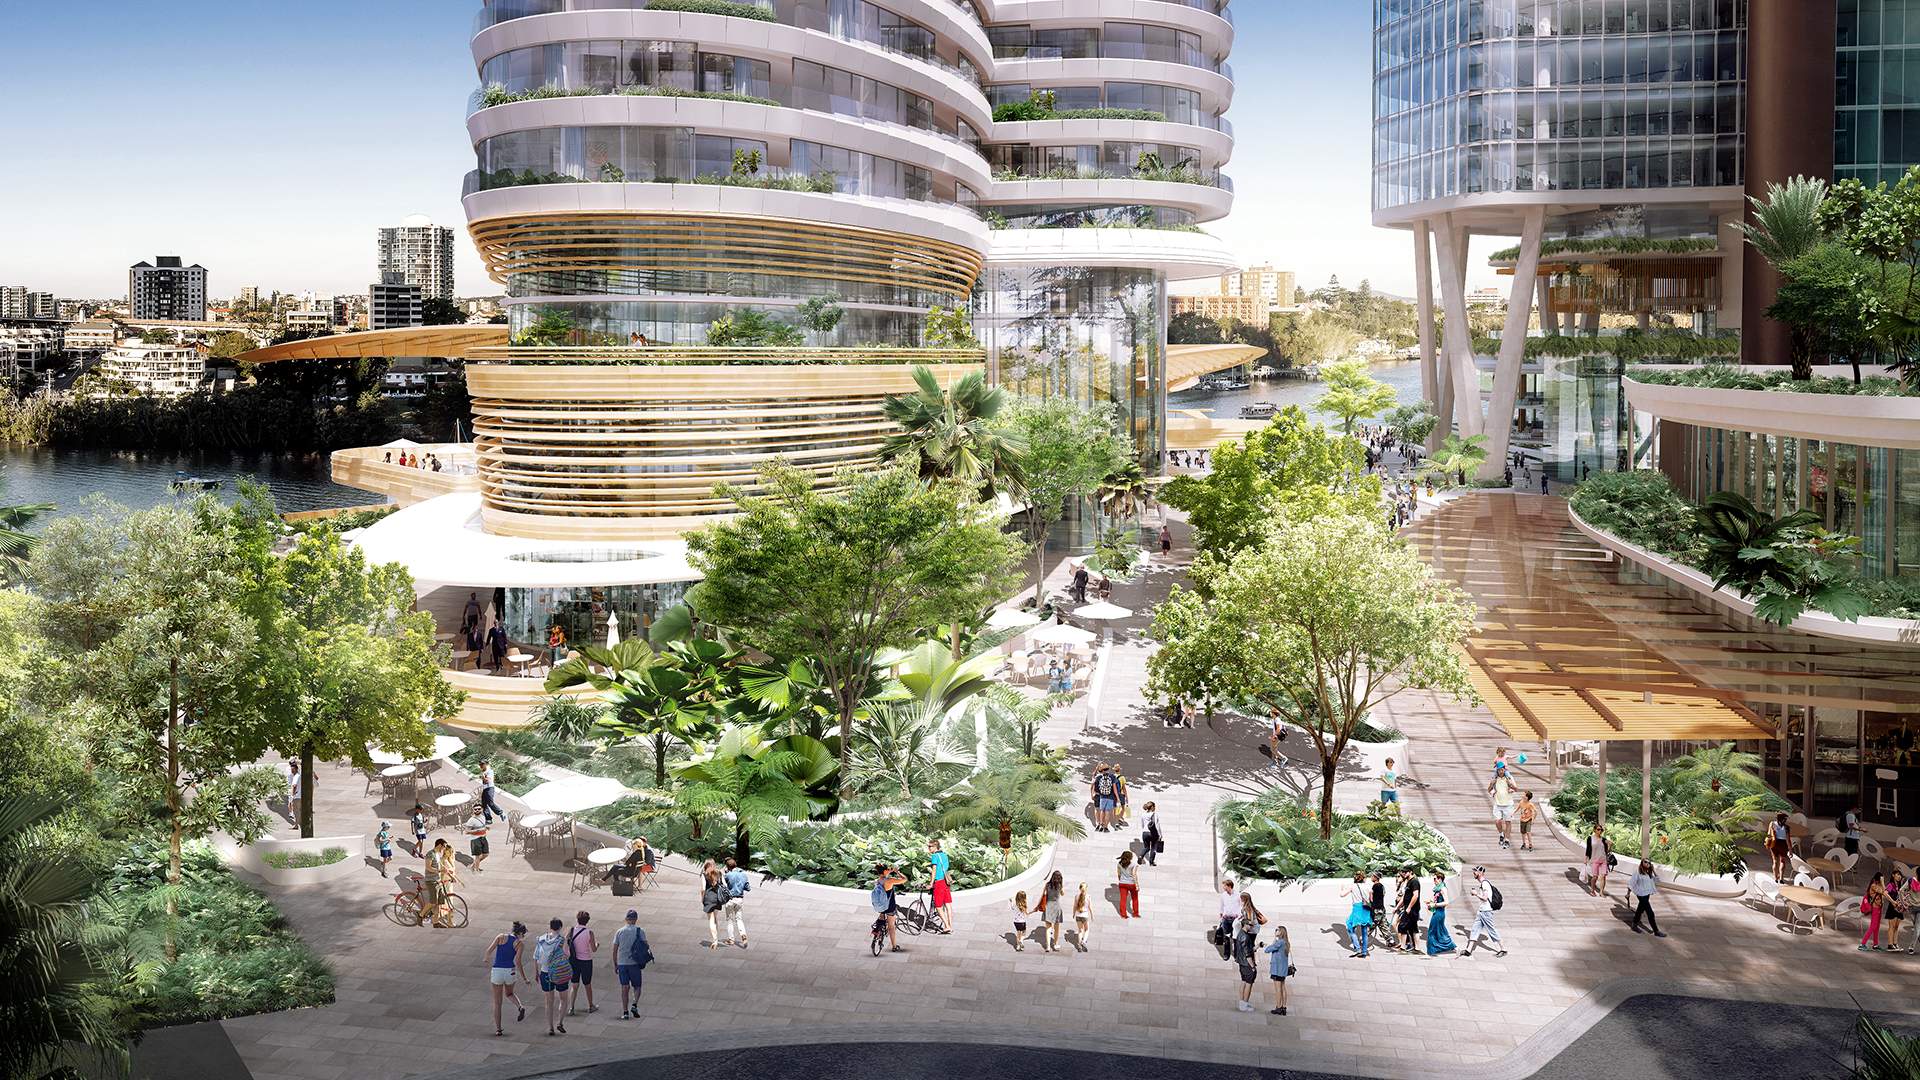 Brisbane's Eagle Street Pier to Make Way for New $1.4 Billion Waterfront Precinct